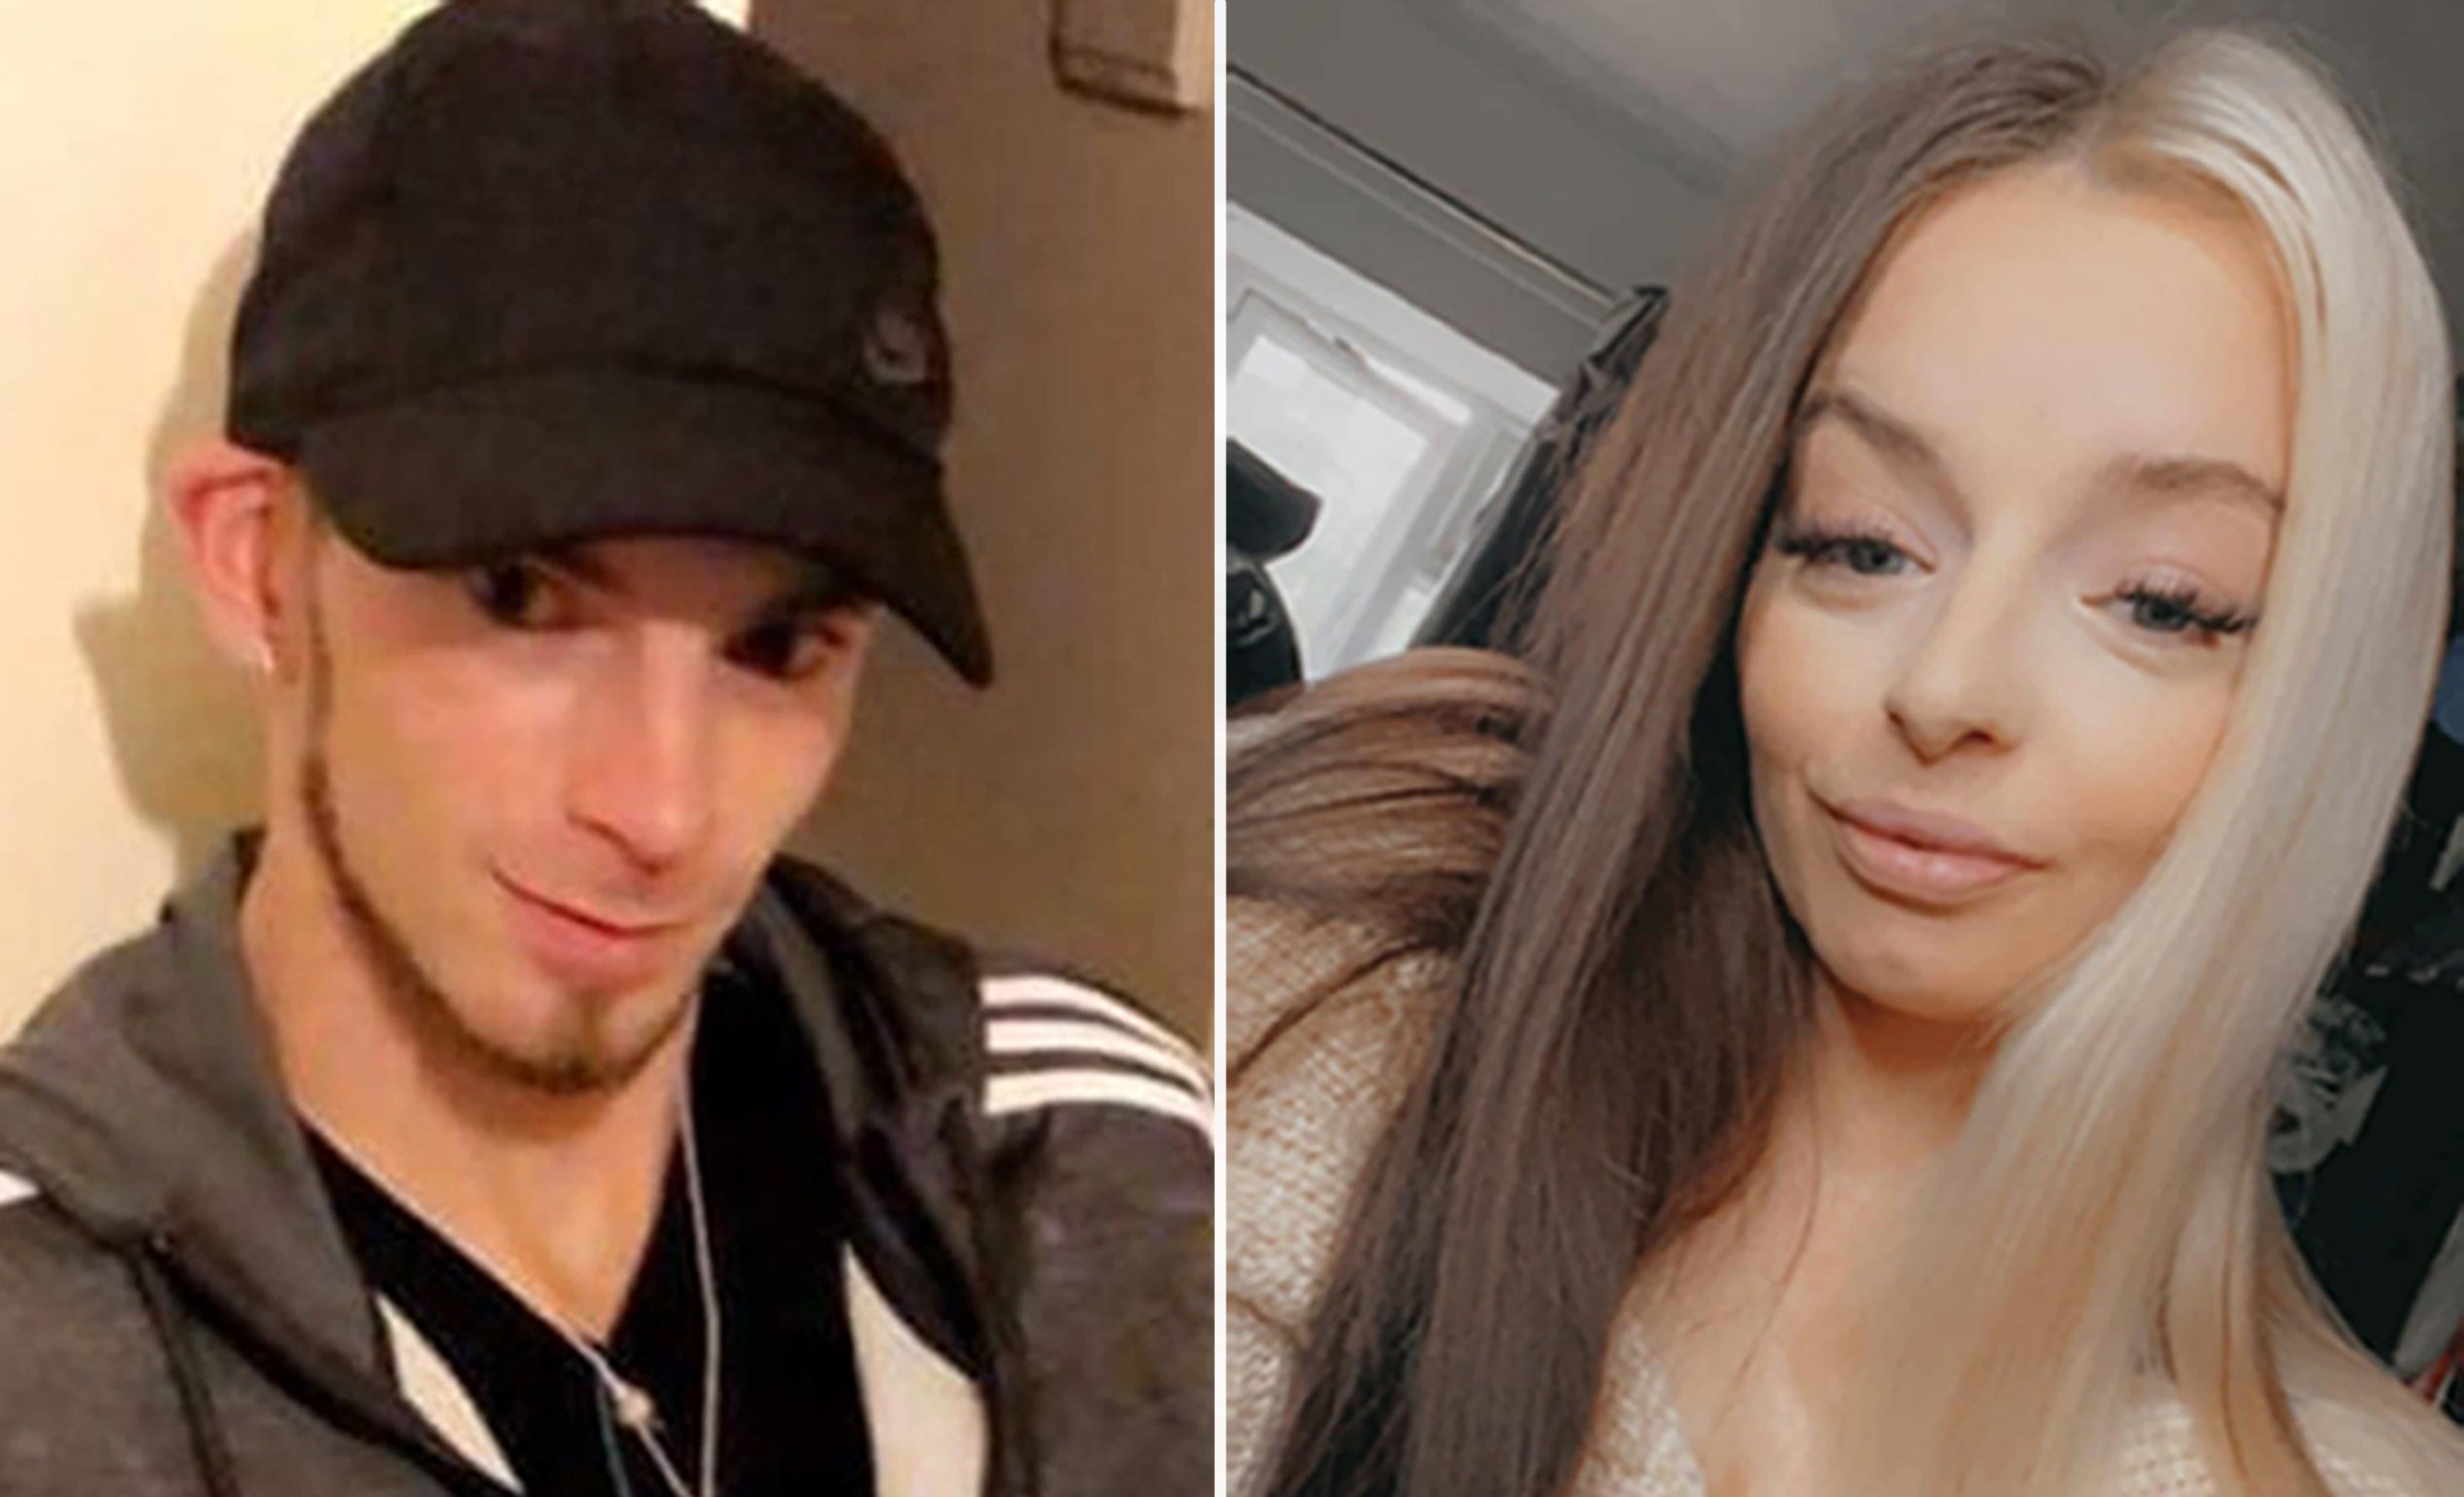 Steven Harnett and Katie Higton were found dead in Huddersfield